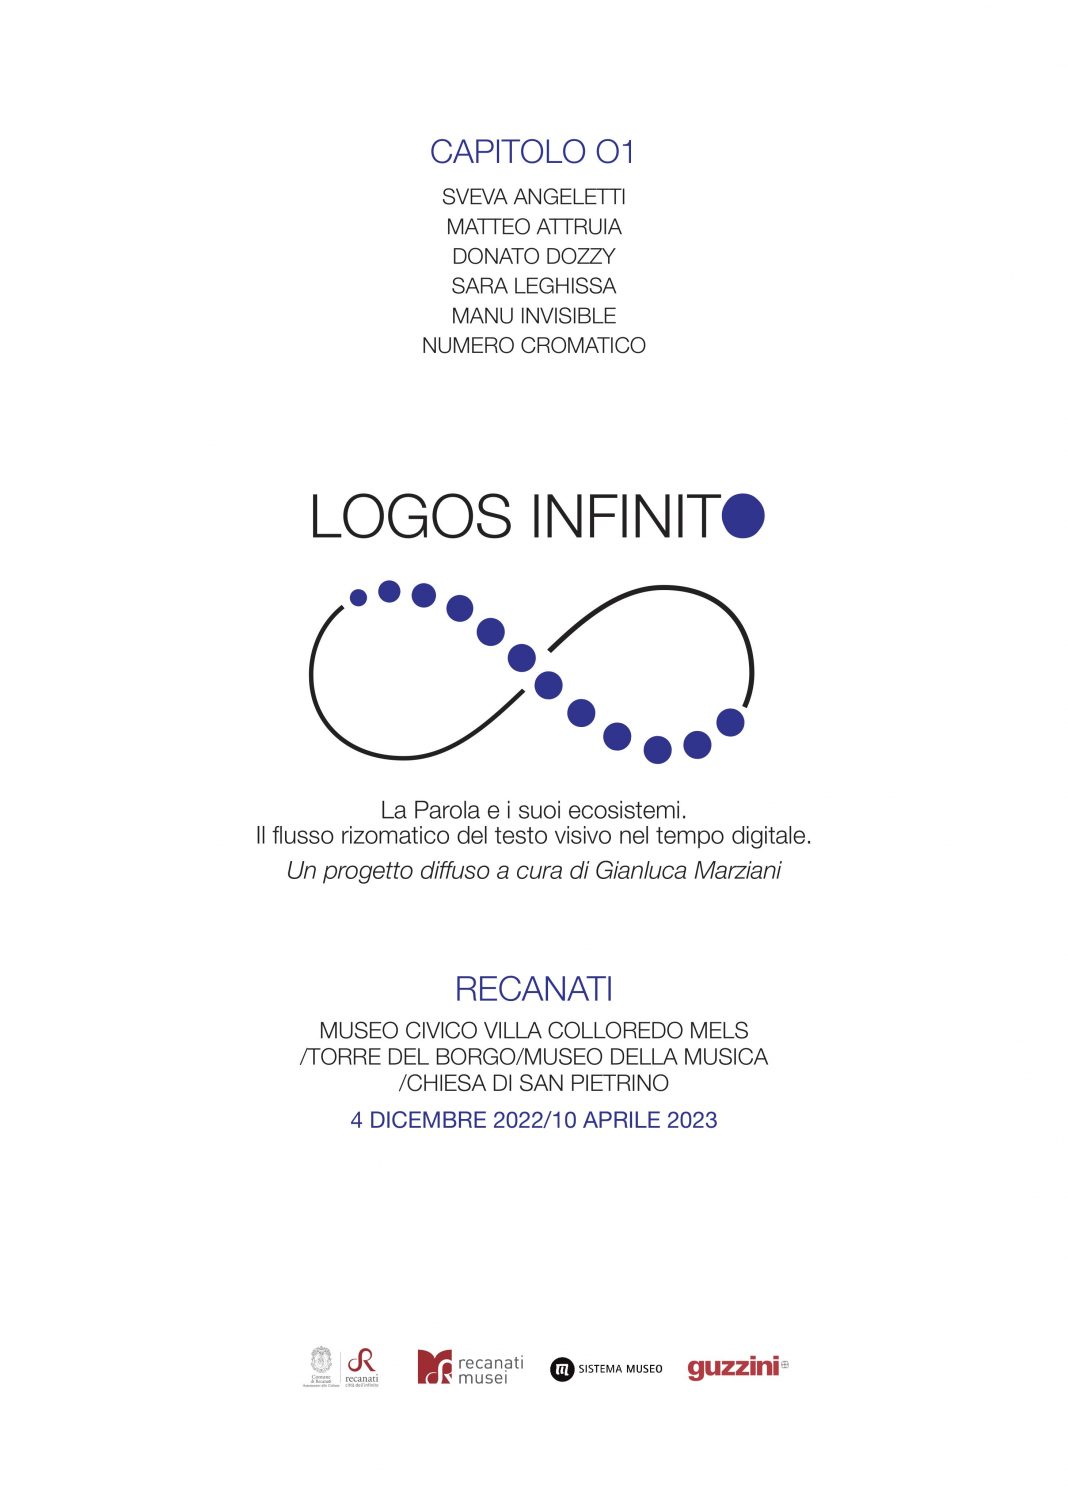 Logos Infinitohttps://www.exibart.com/repository/media/formidable/11/img/e48/locandina-web-1068x1511.jpg